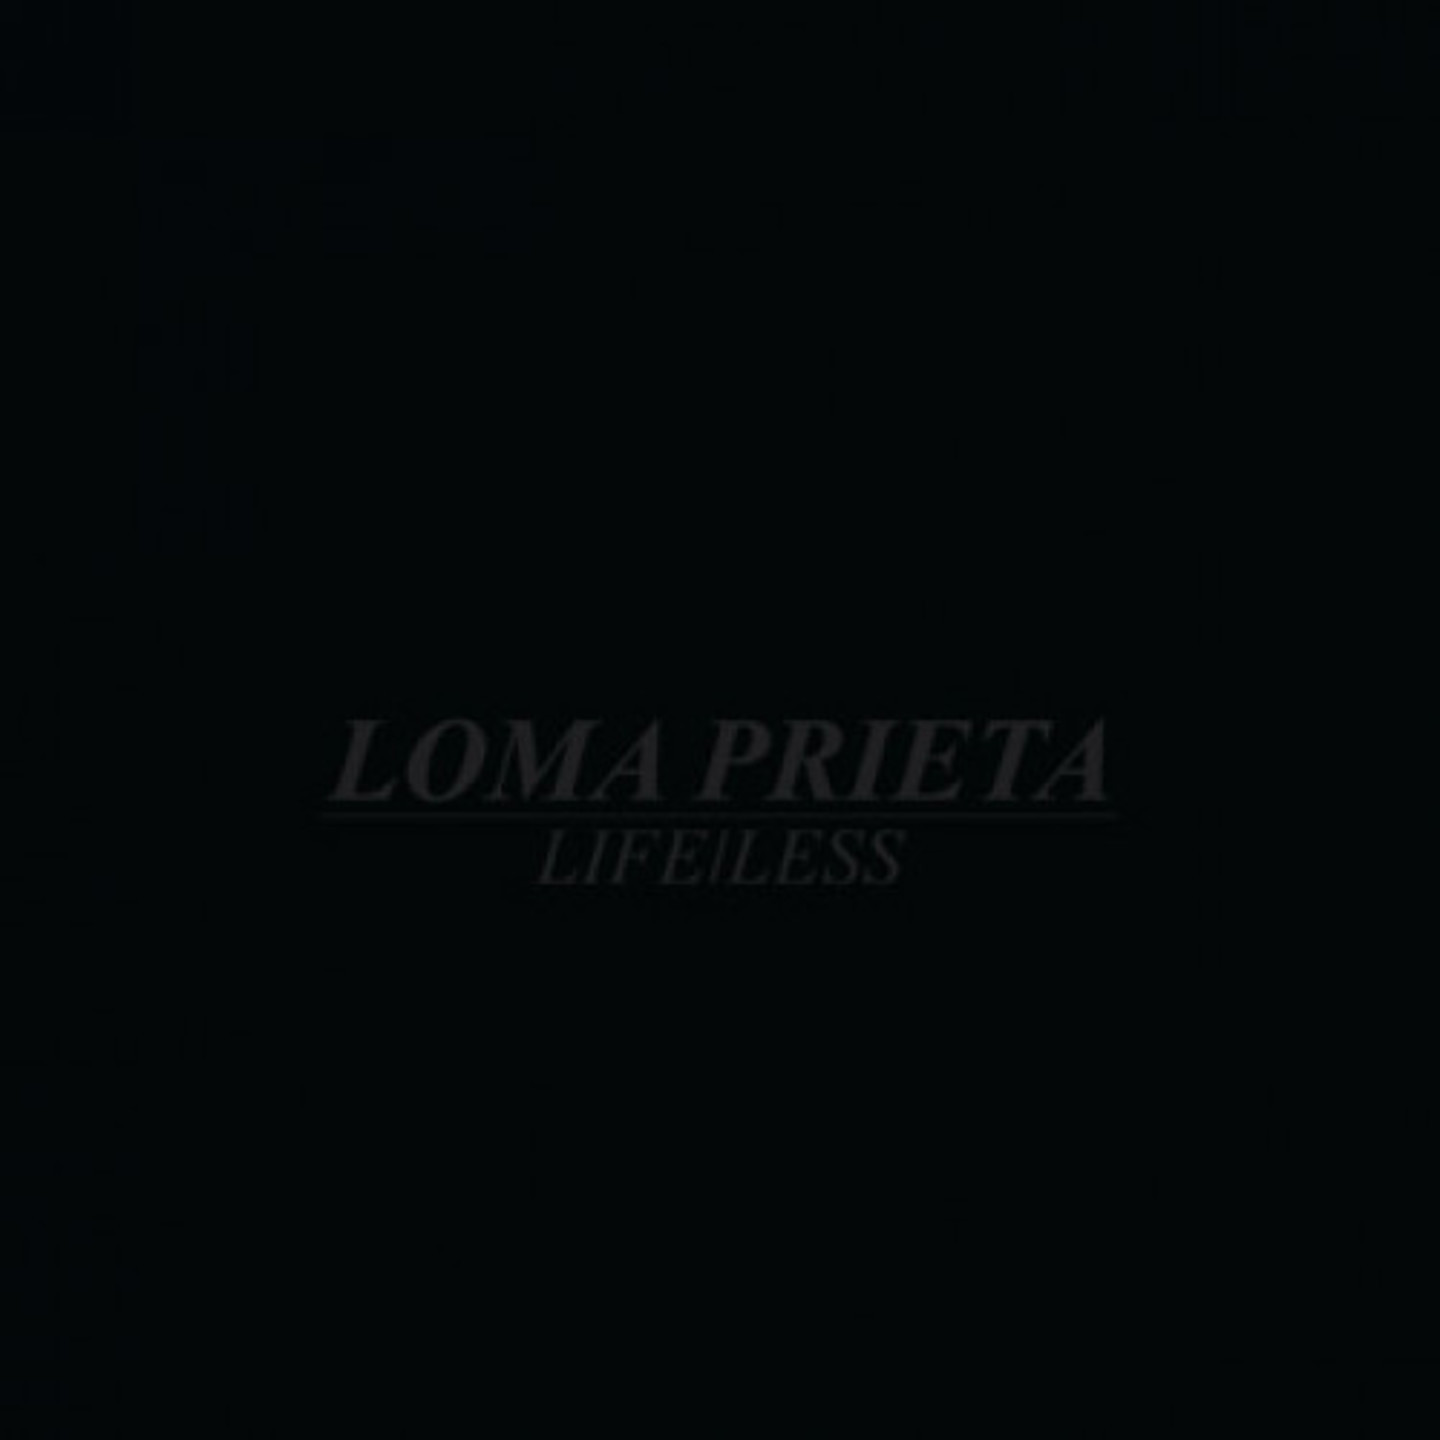 LOMA PRIETA - LifeLess LP